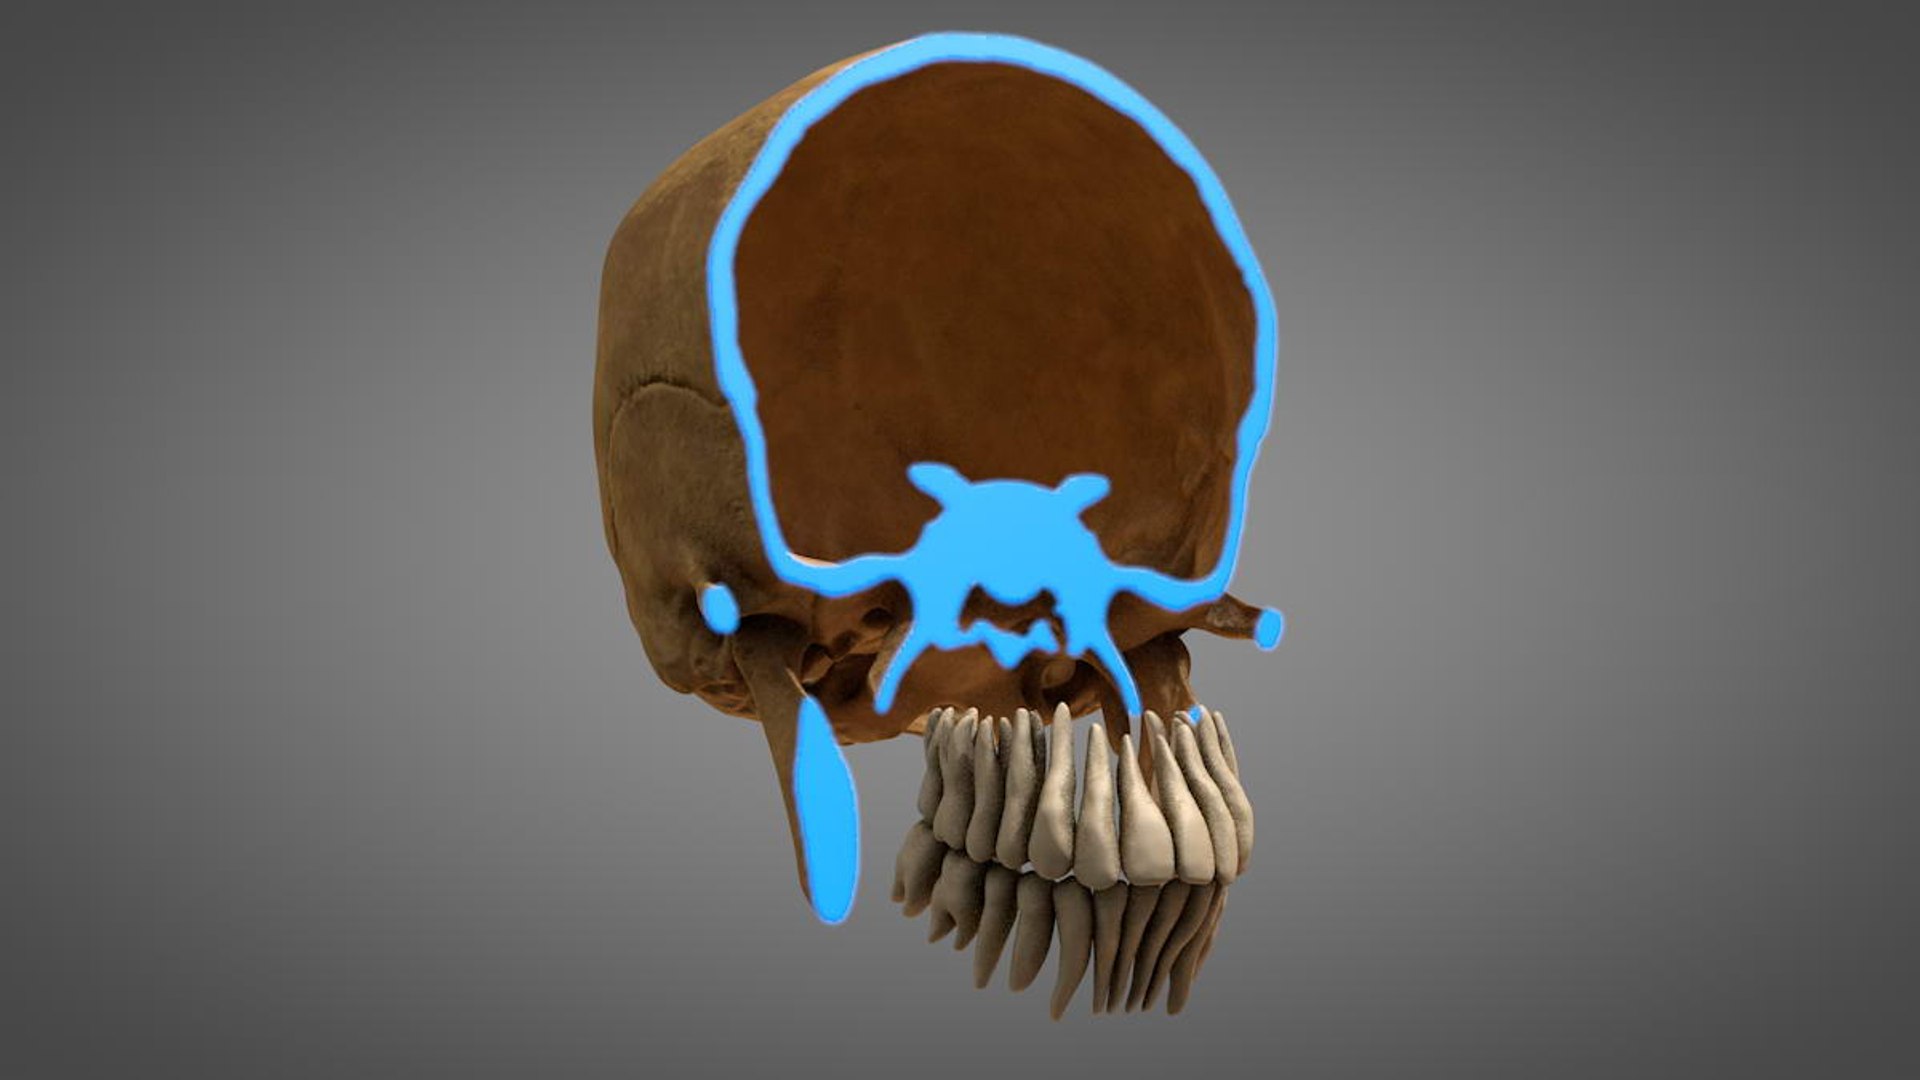 Anatomical Human Skull Teeth 3d Model Turbosquid 1407871